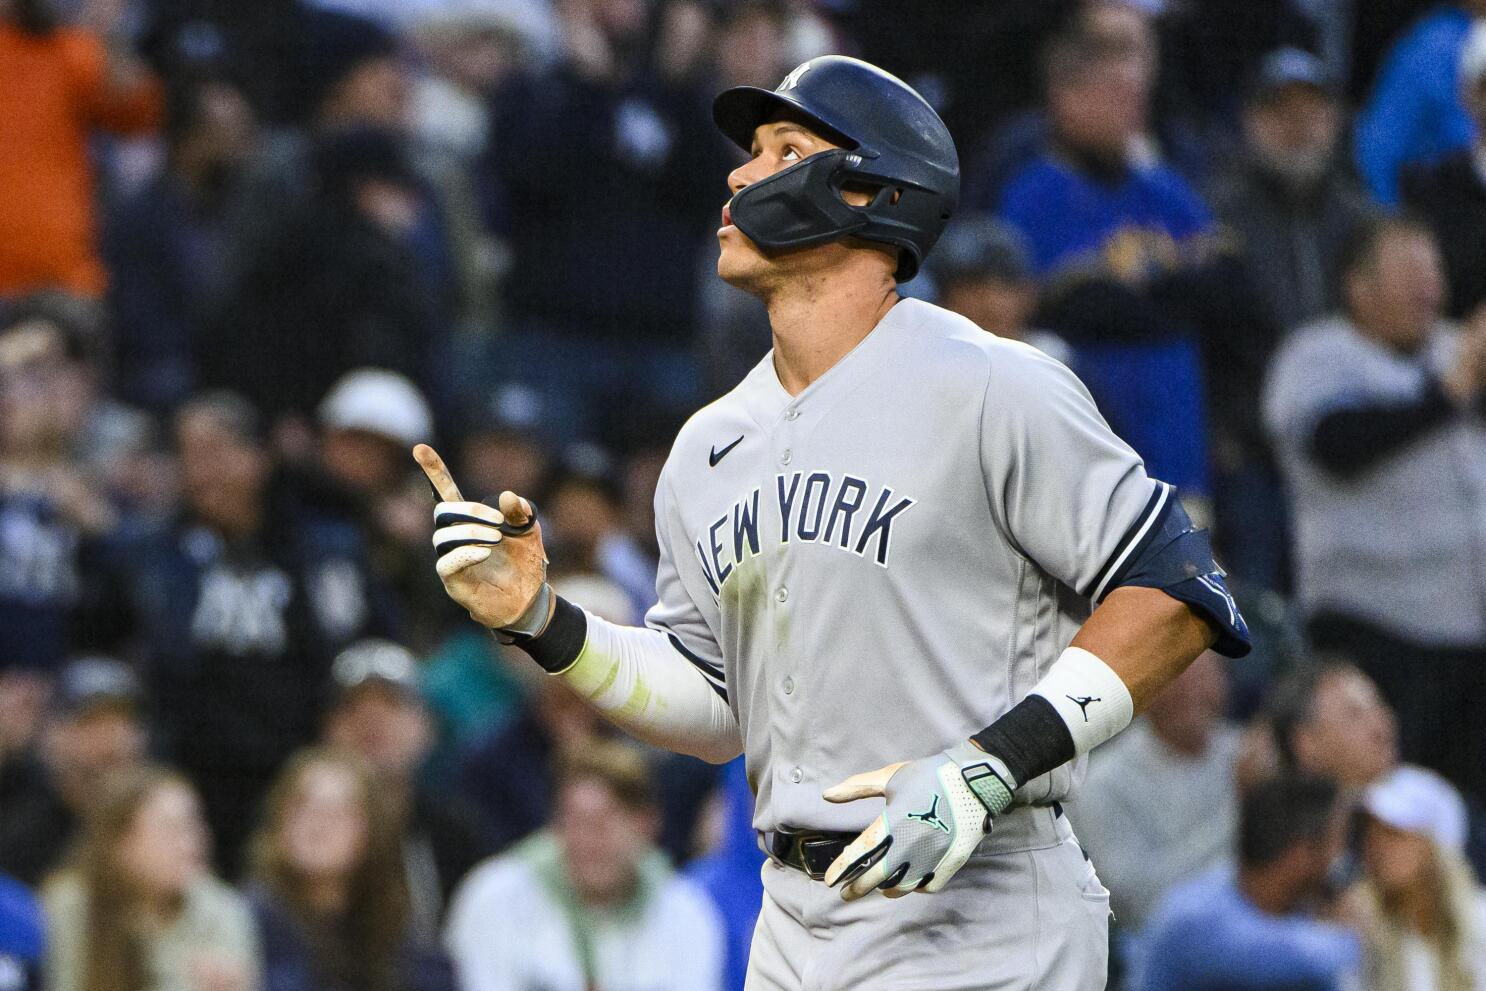 Judge hits 20th homer as Yankees hold off Mariners 5-4